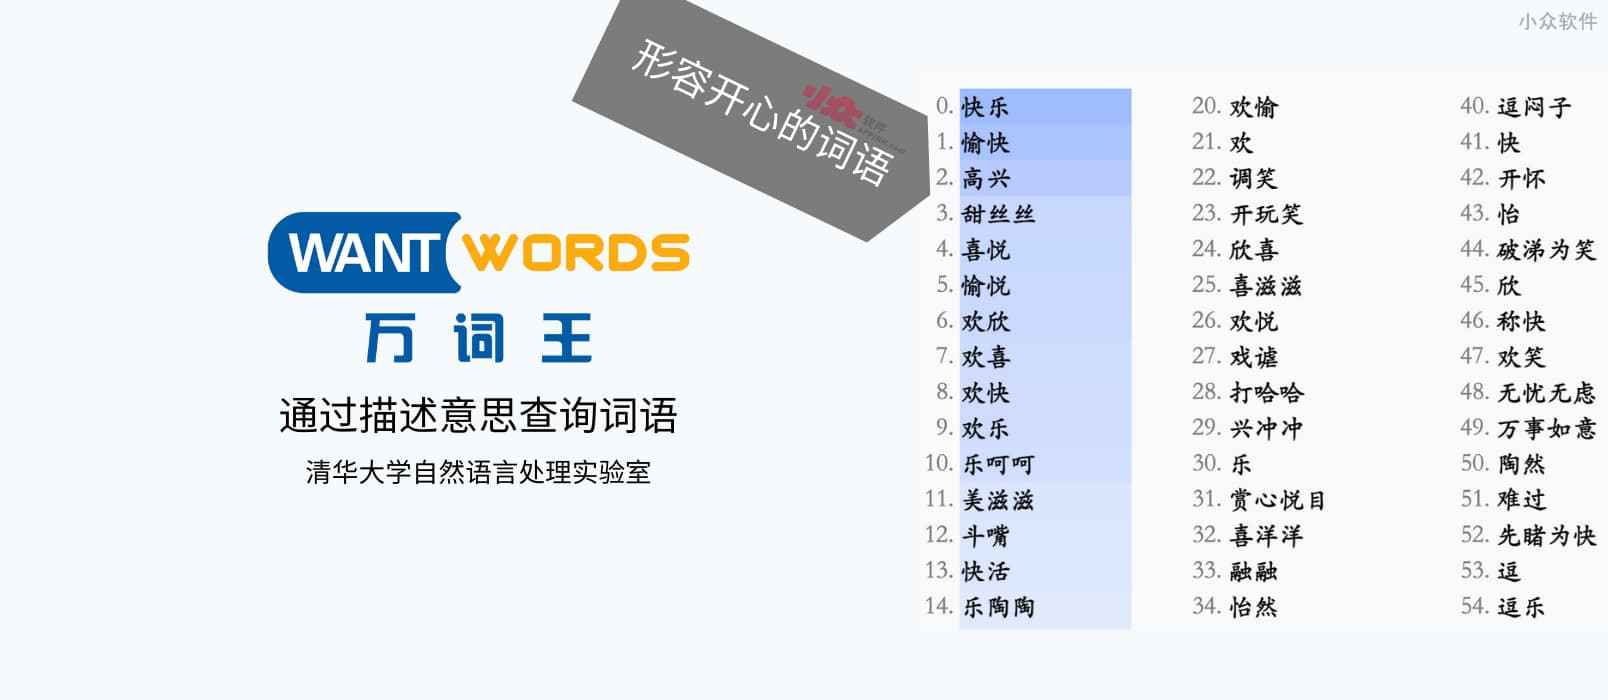 WantWords反向词典（万词王） – 清华大学发布开源在线反向词典，通过描述意思来查询 100 个近义词